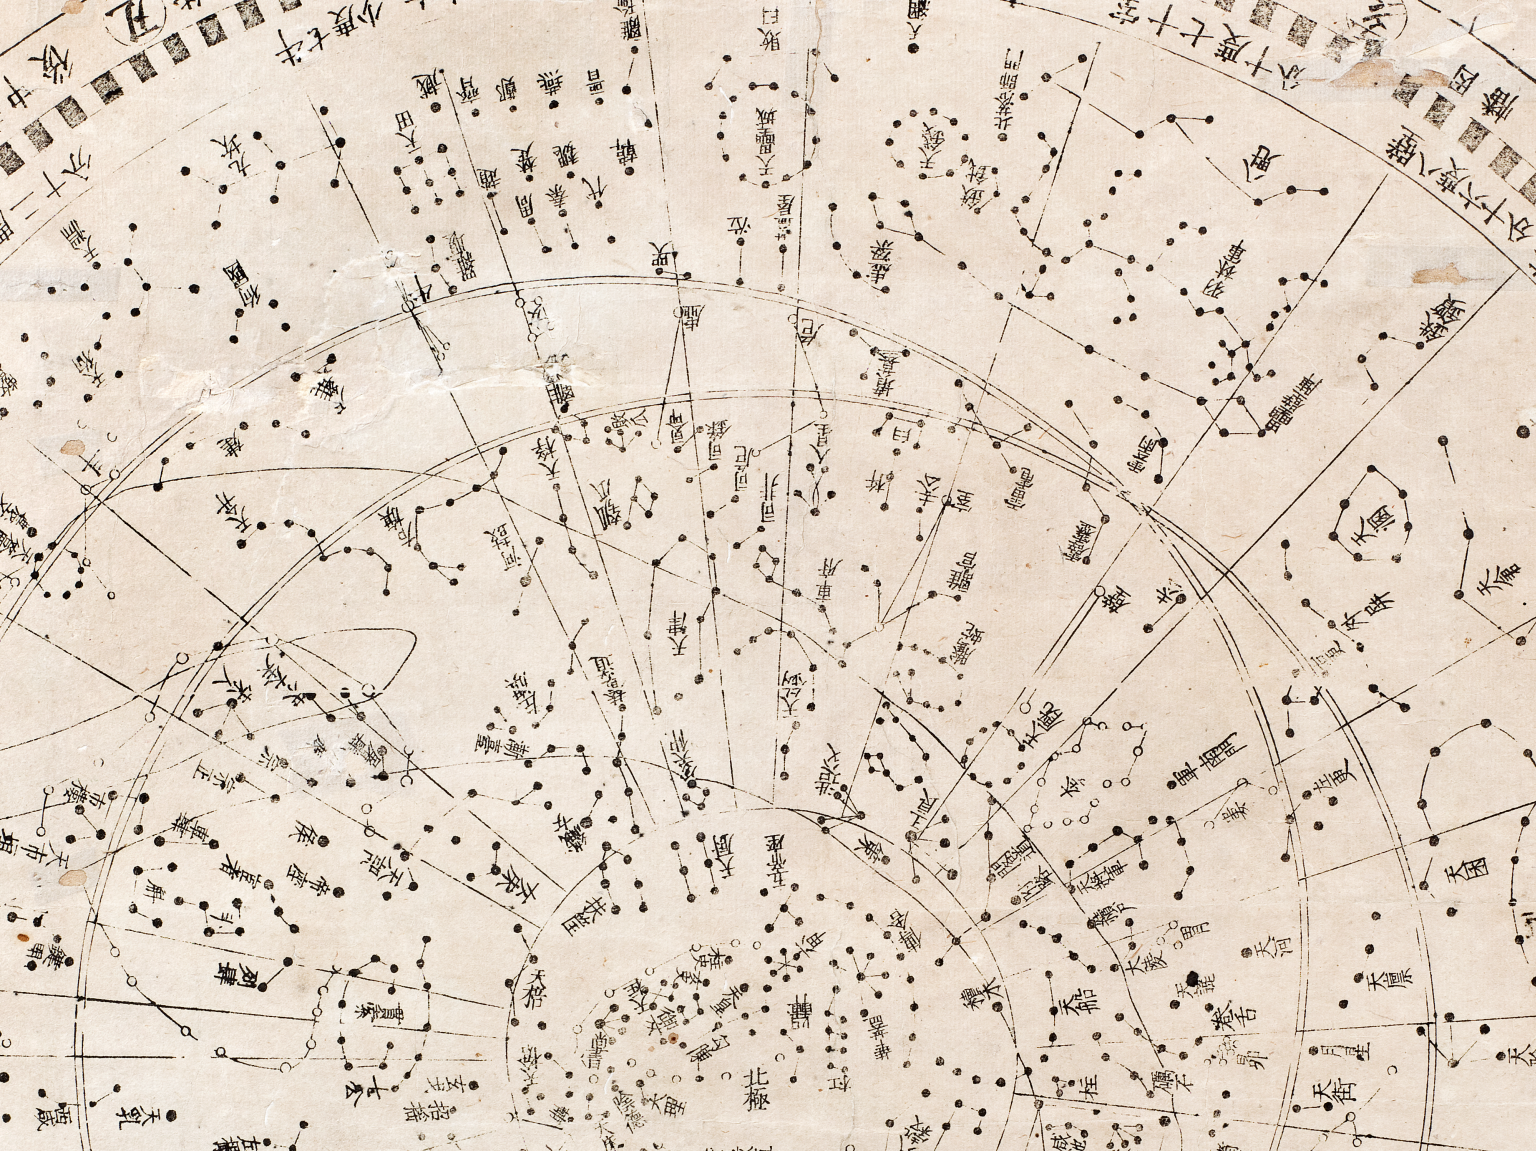 Астрономия созвездия карта звездного неба. Древняя астрономическая карта. Карта созвездий 17 века. Старинная карта созвездий. Древнее звездное небо